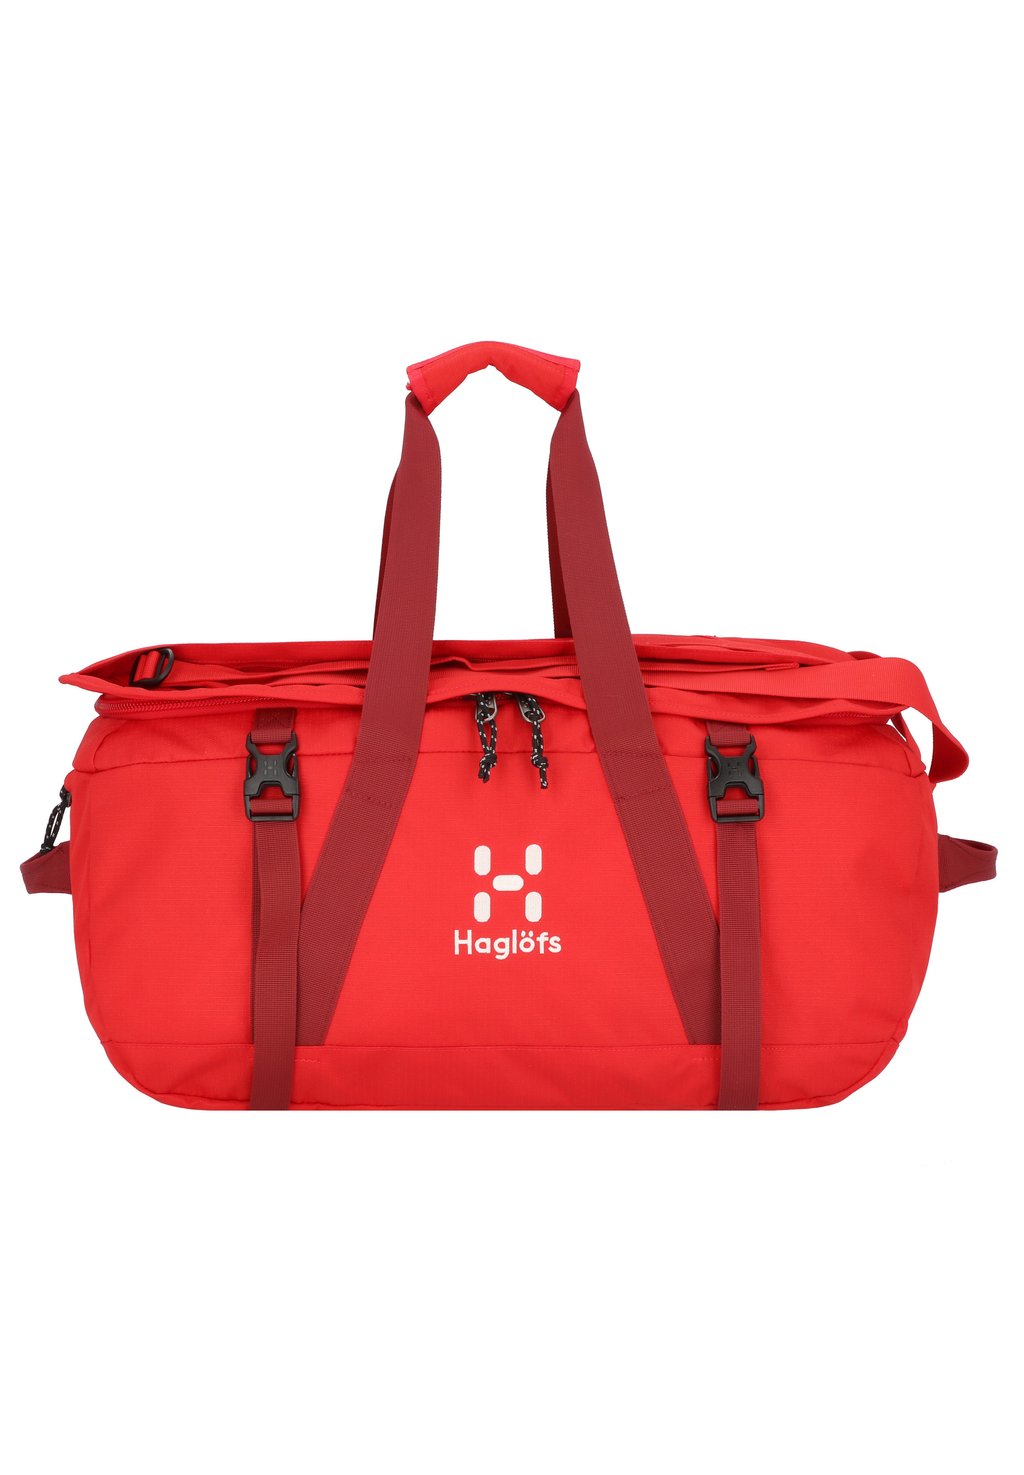 Дорожная сумка CARGO Haglöfs, цвет scarlet red dala red